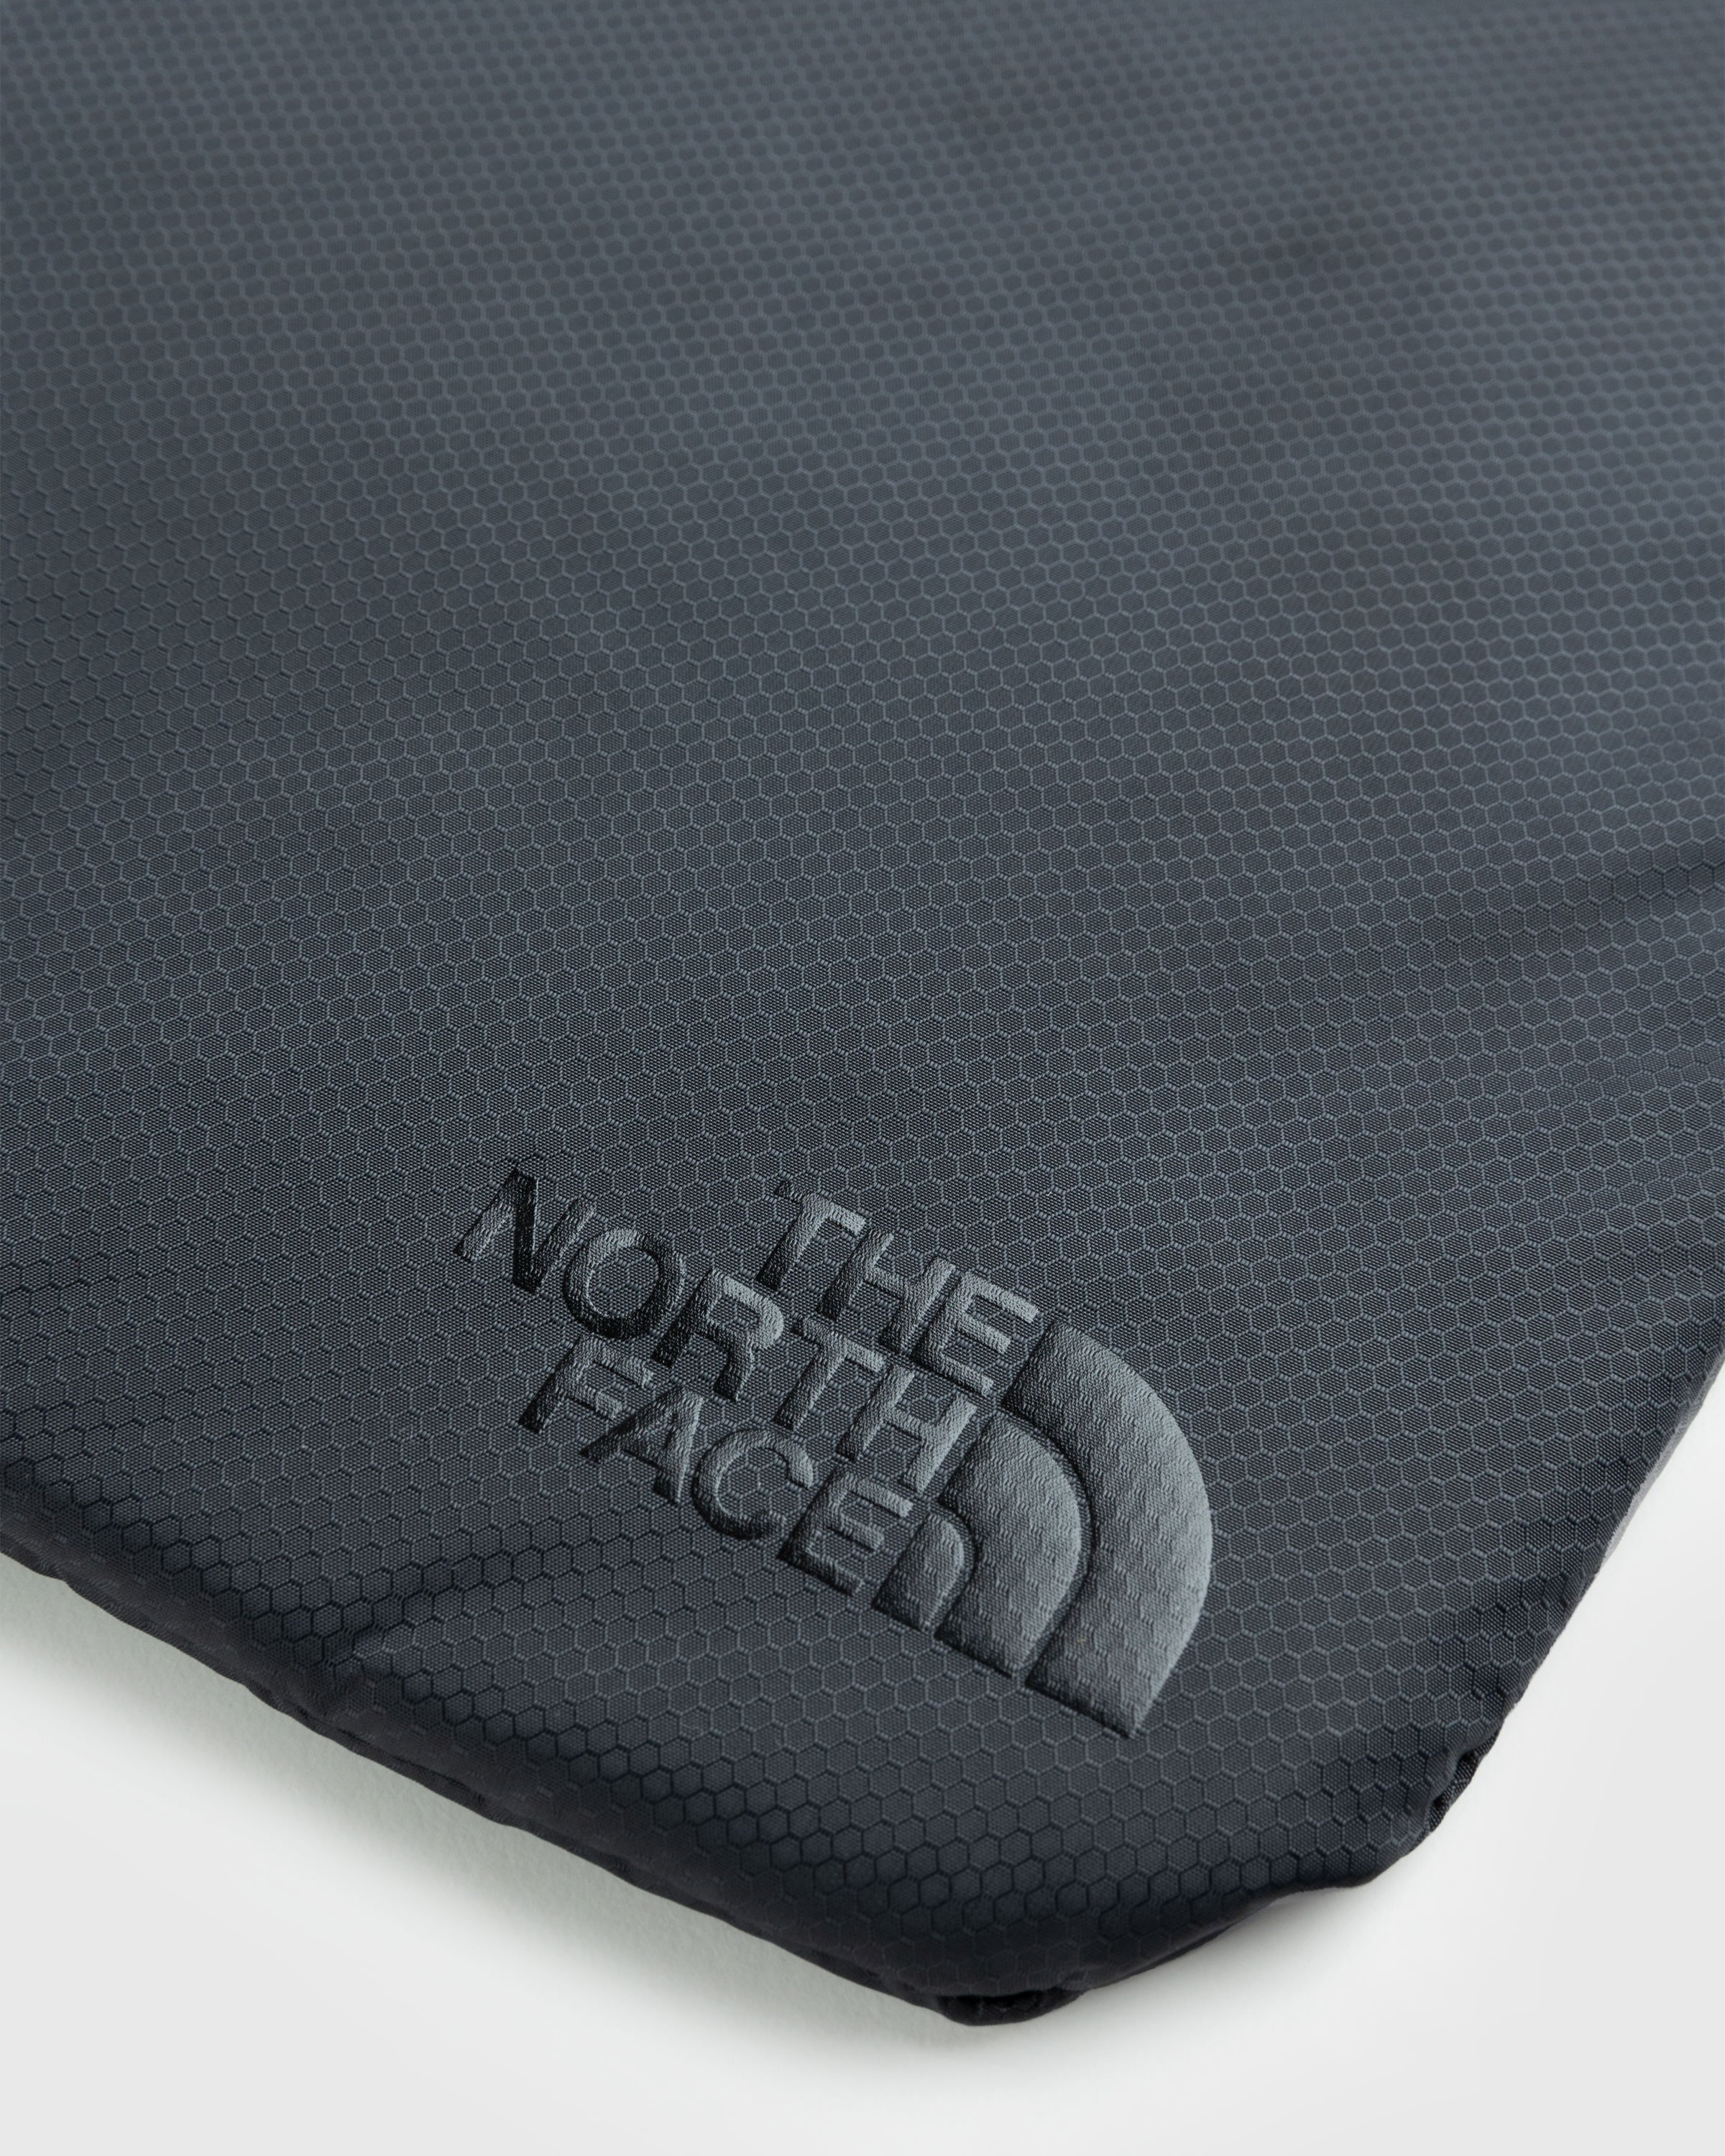 The North Face - Flyweight Laptop Sleeve 13” Asphalt Grey/TNF Black - Accessories - Grey - Image 3